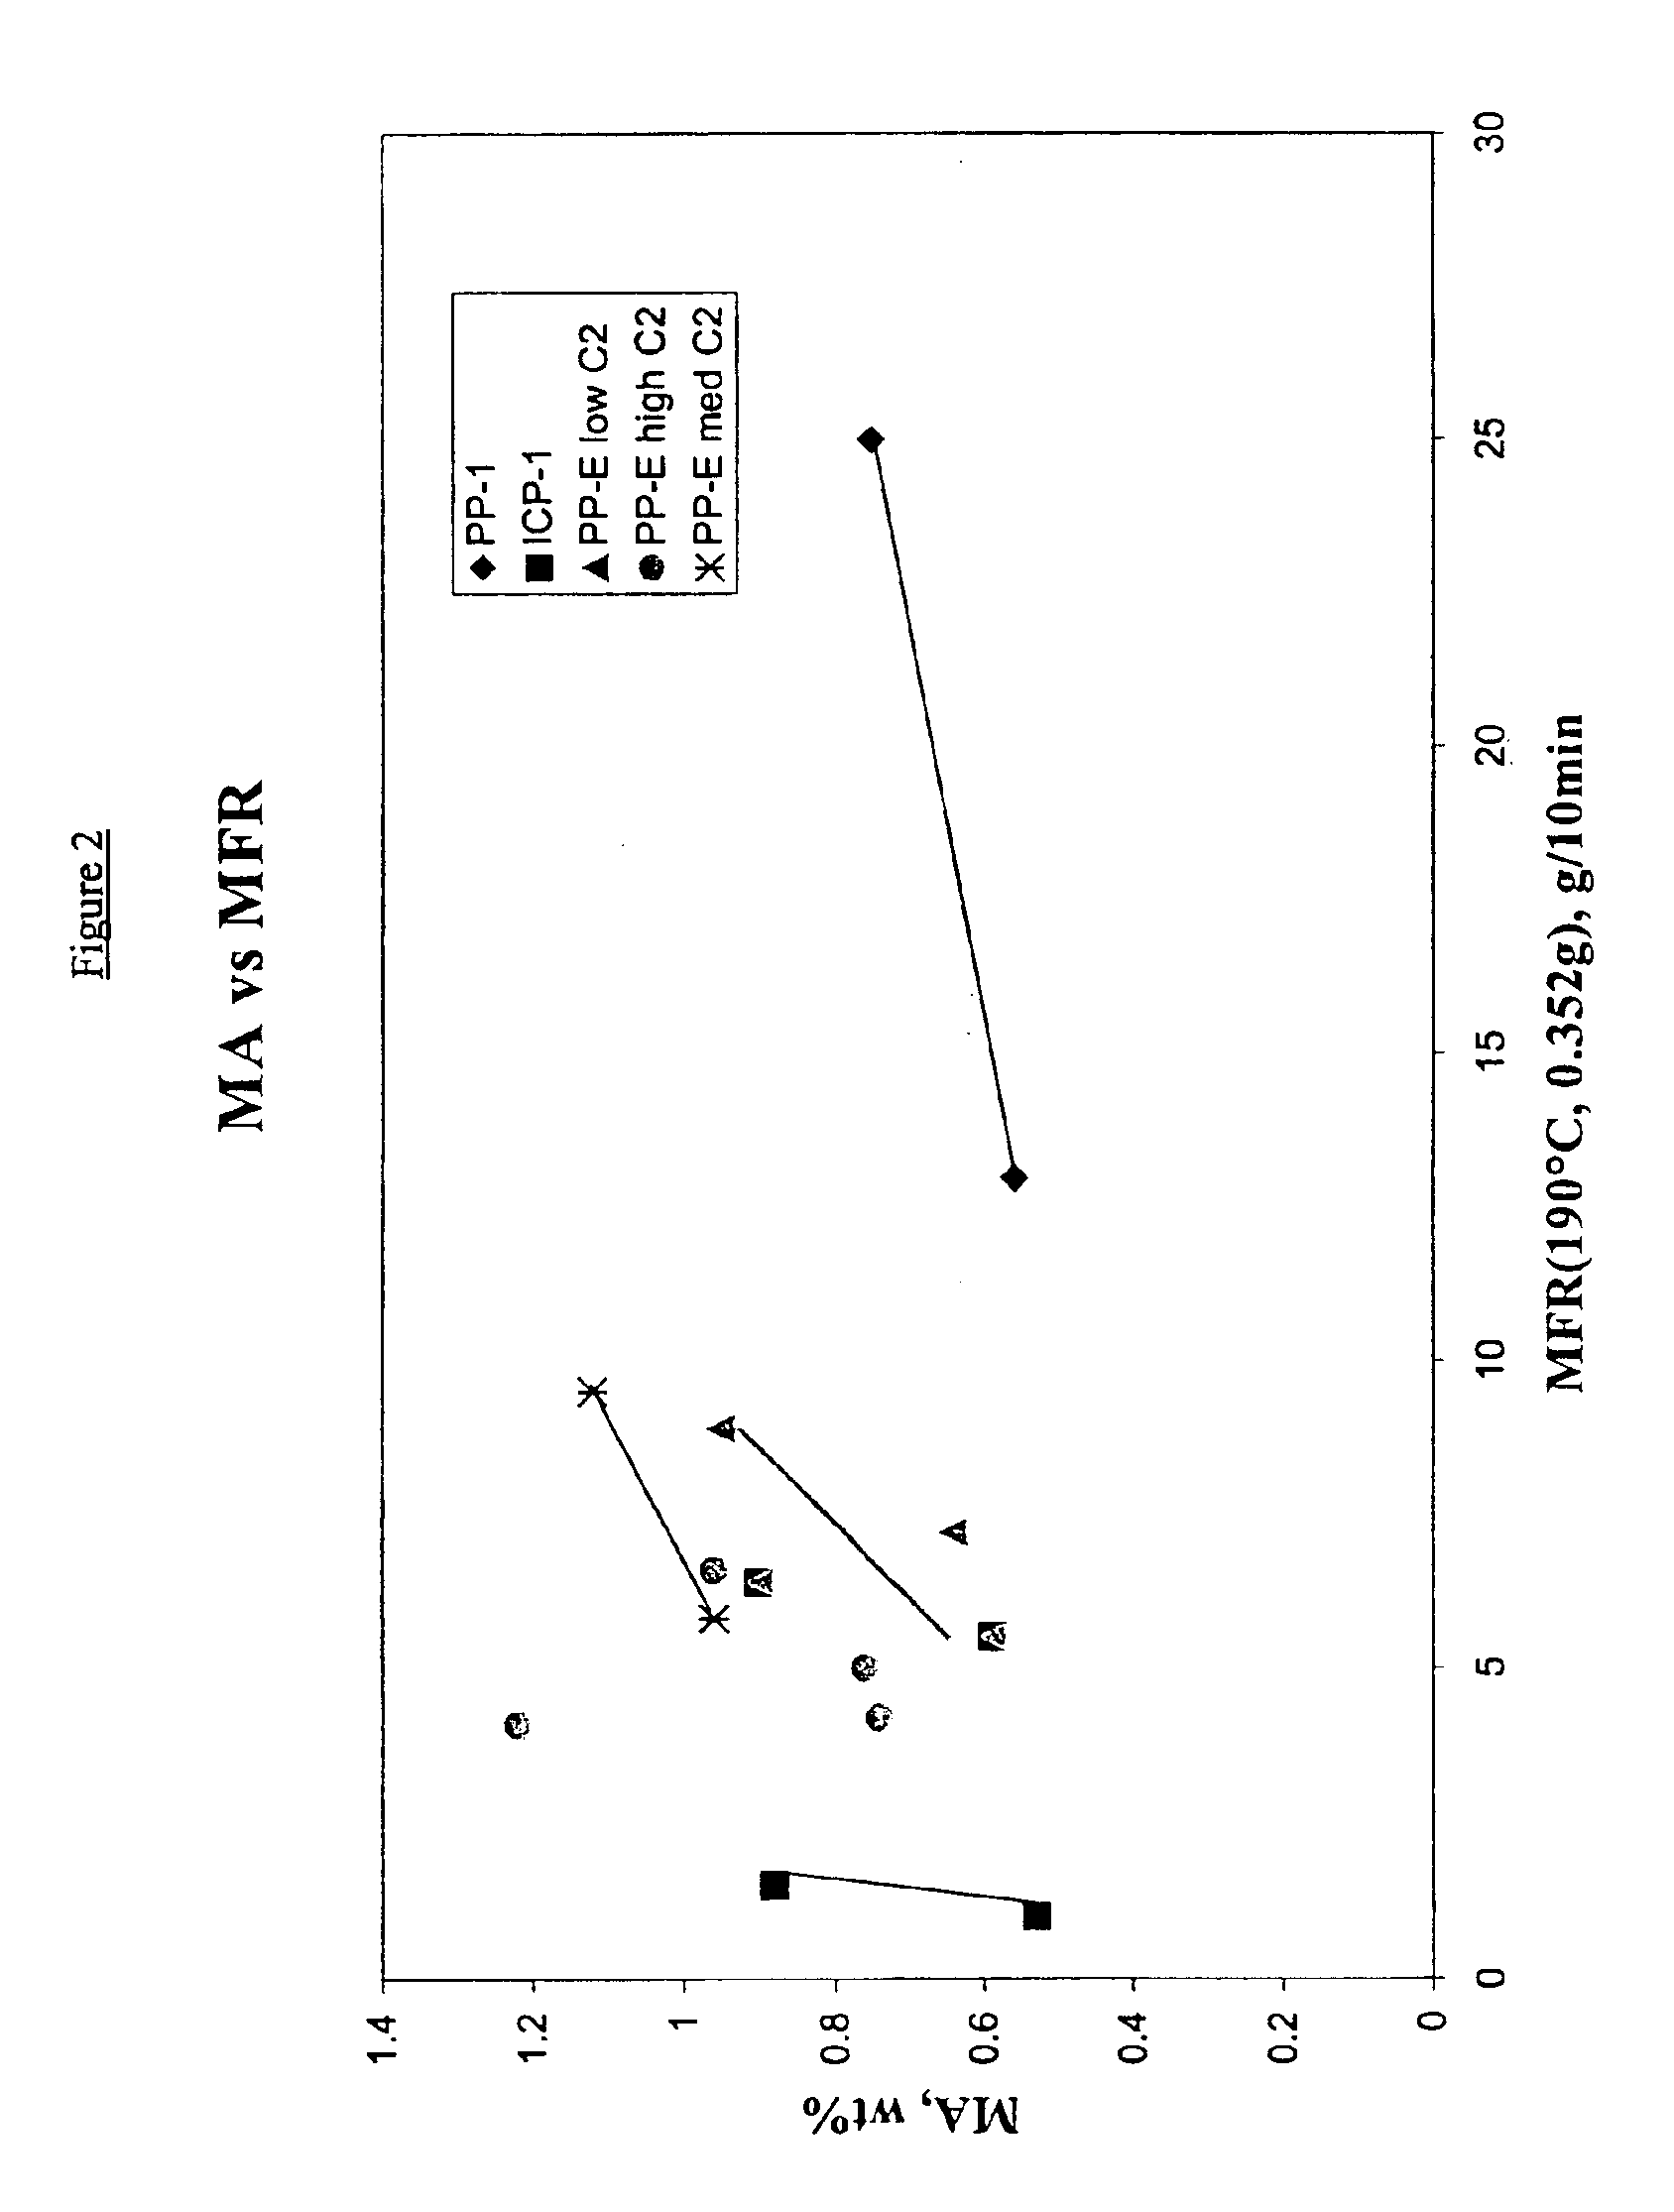 Graft-modified polymers based on novel propylene ethylene copolymers